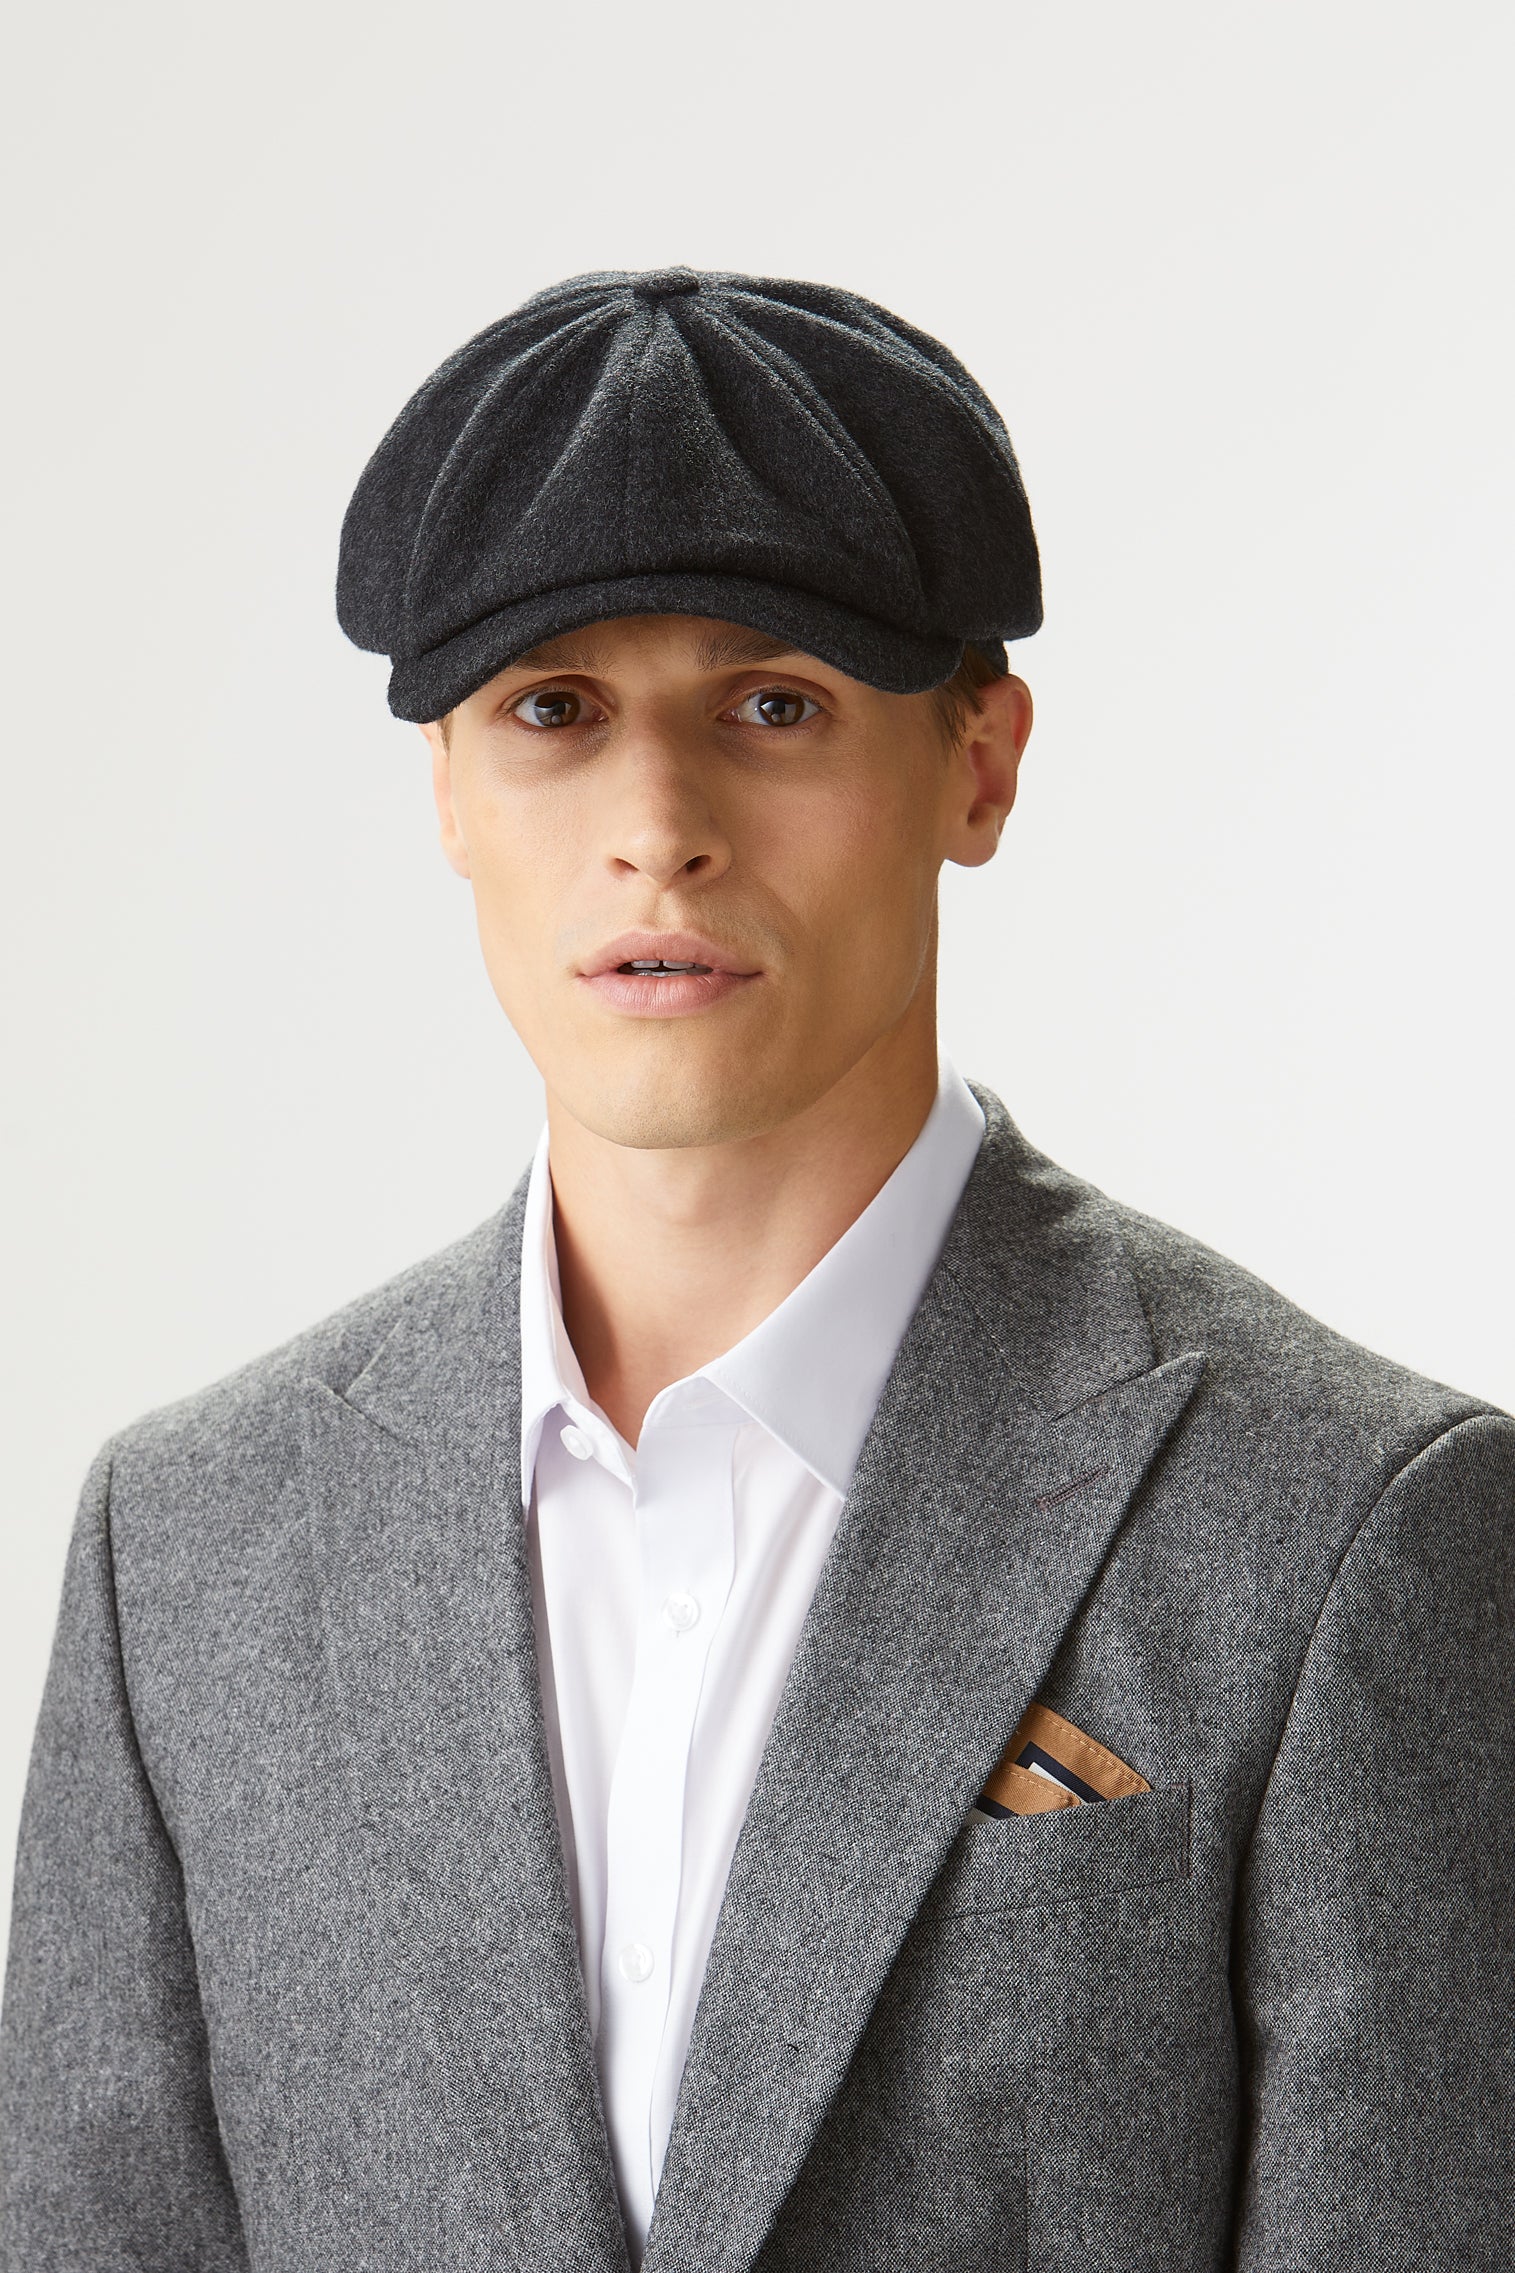 Escorial Wool Newsboy Cap - Hats for Heart-shaped Face Shapes - Lock & Co. Hatters London UK